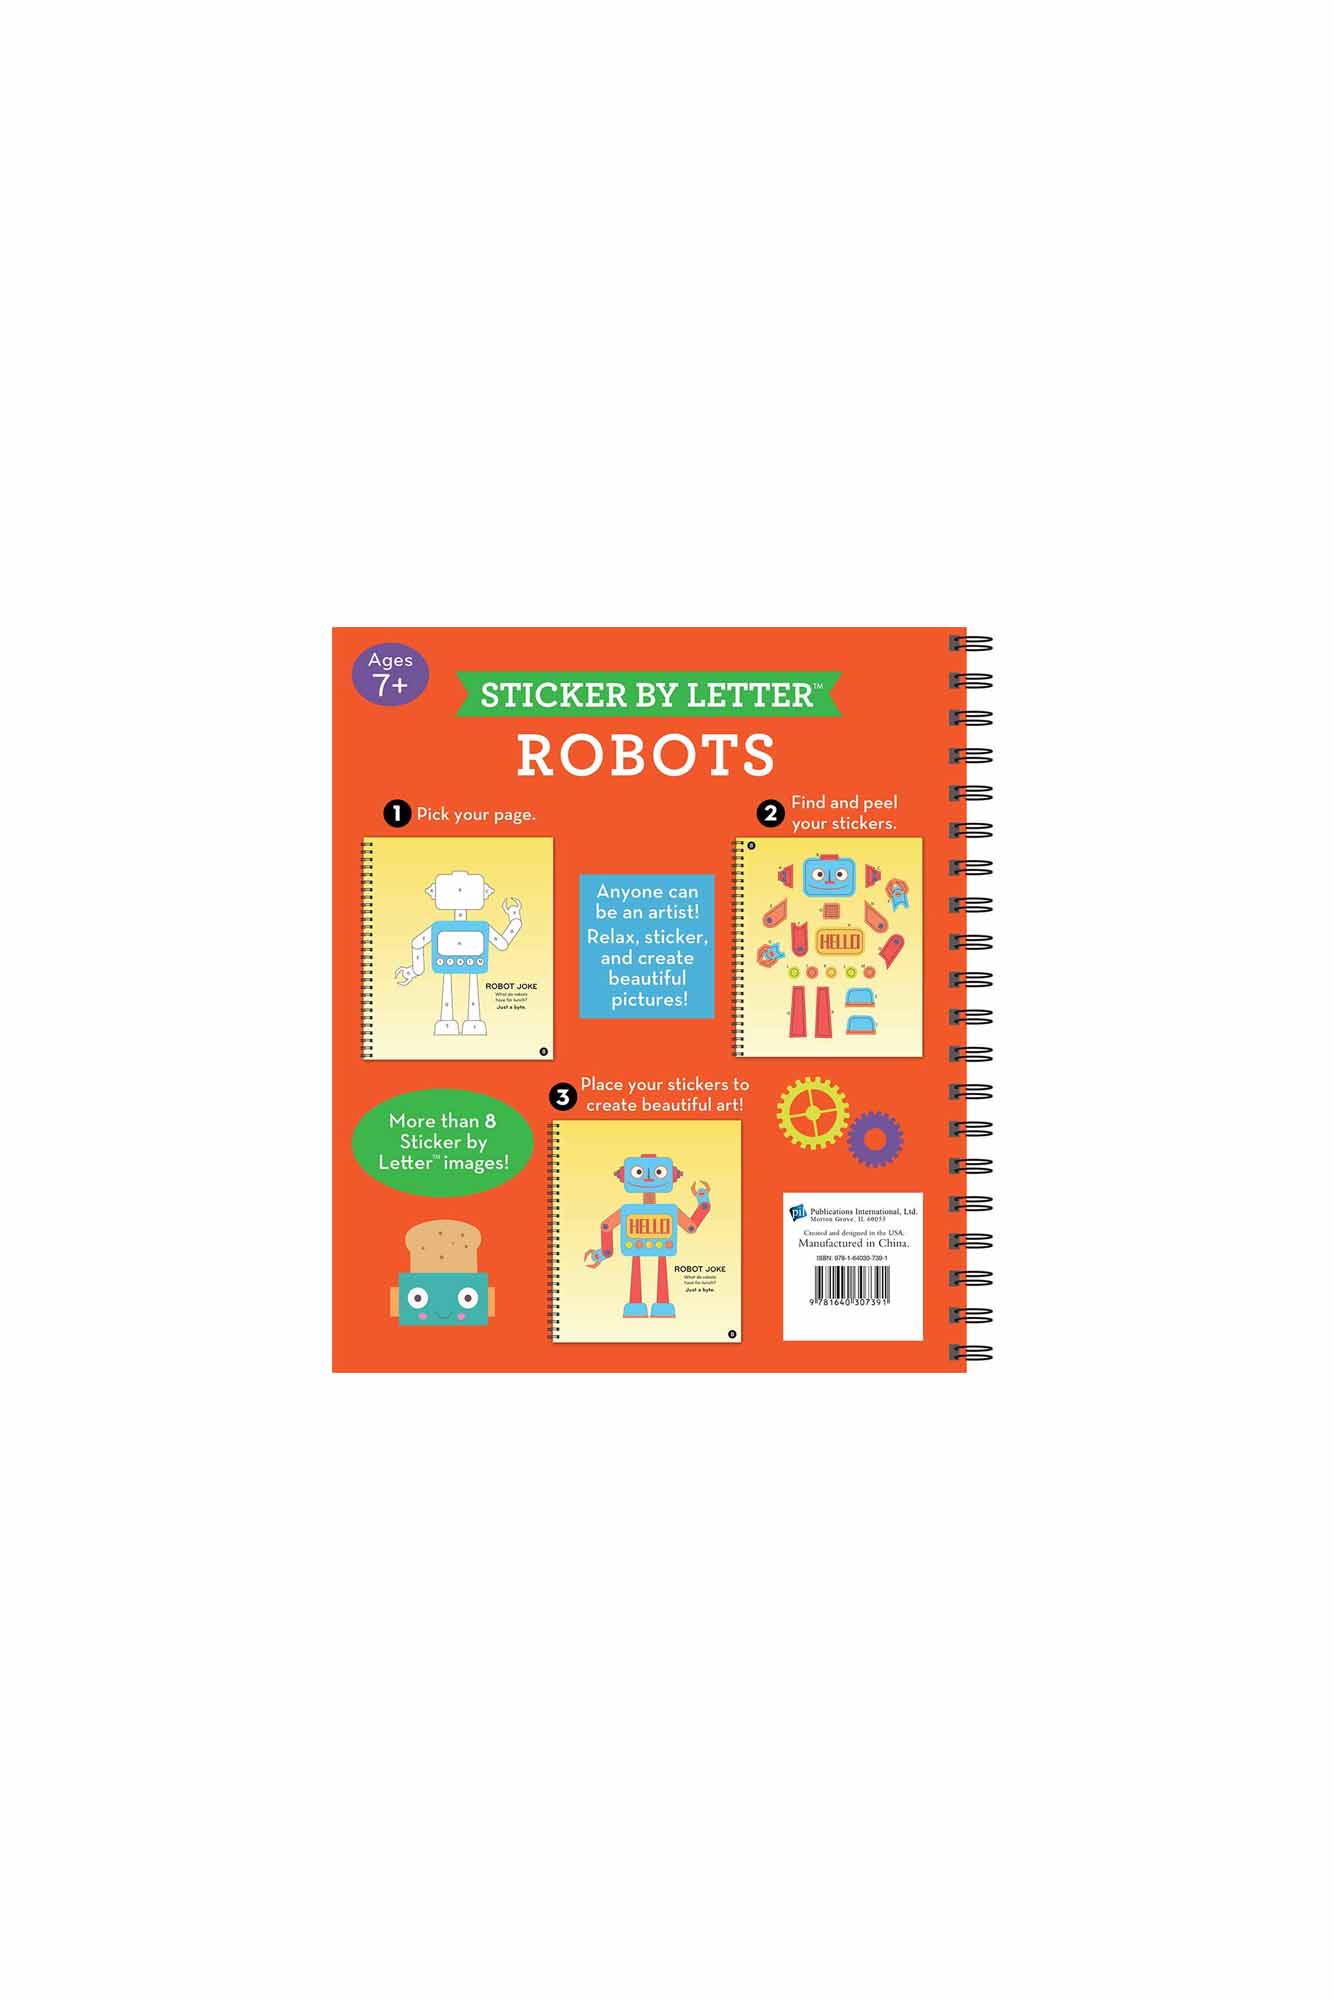 Brain Games - Sticker by Letter: Robots